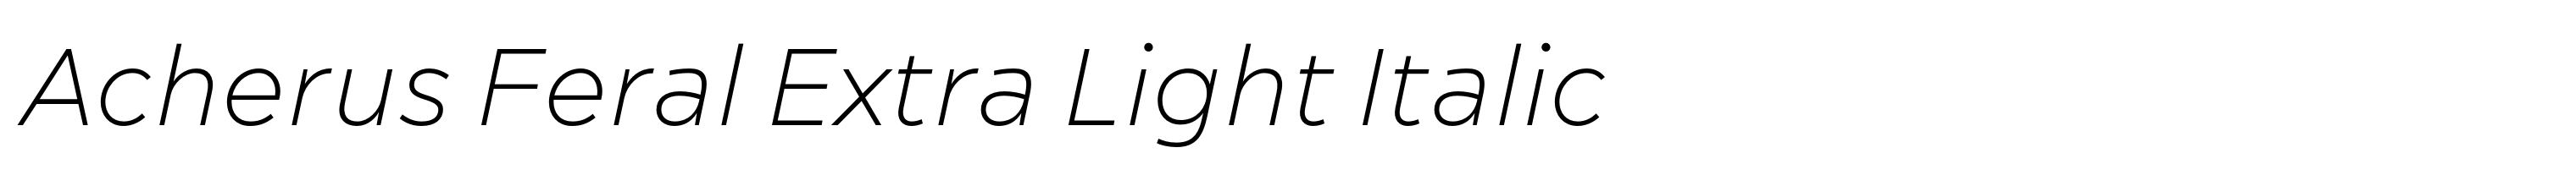 Acherus Feral Extra Light Italic